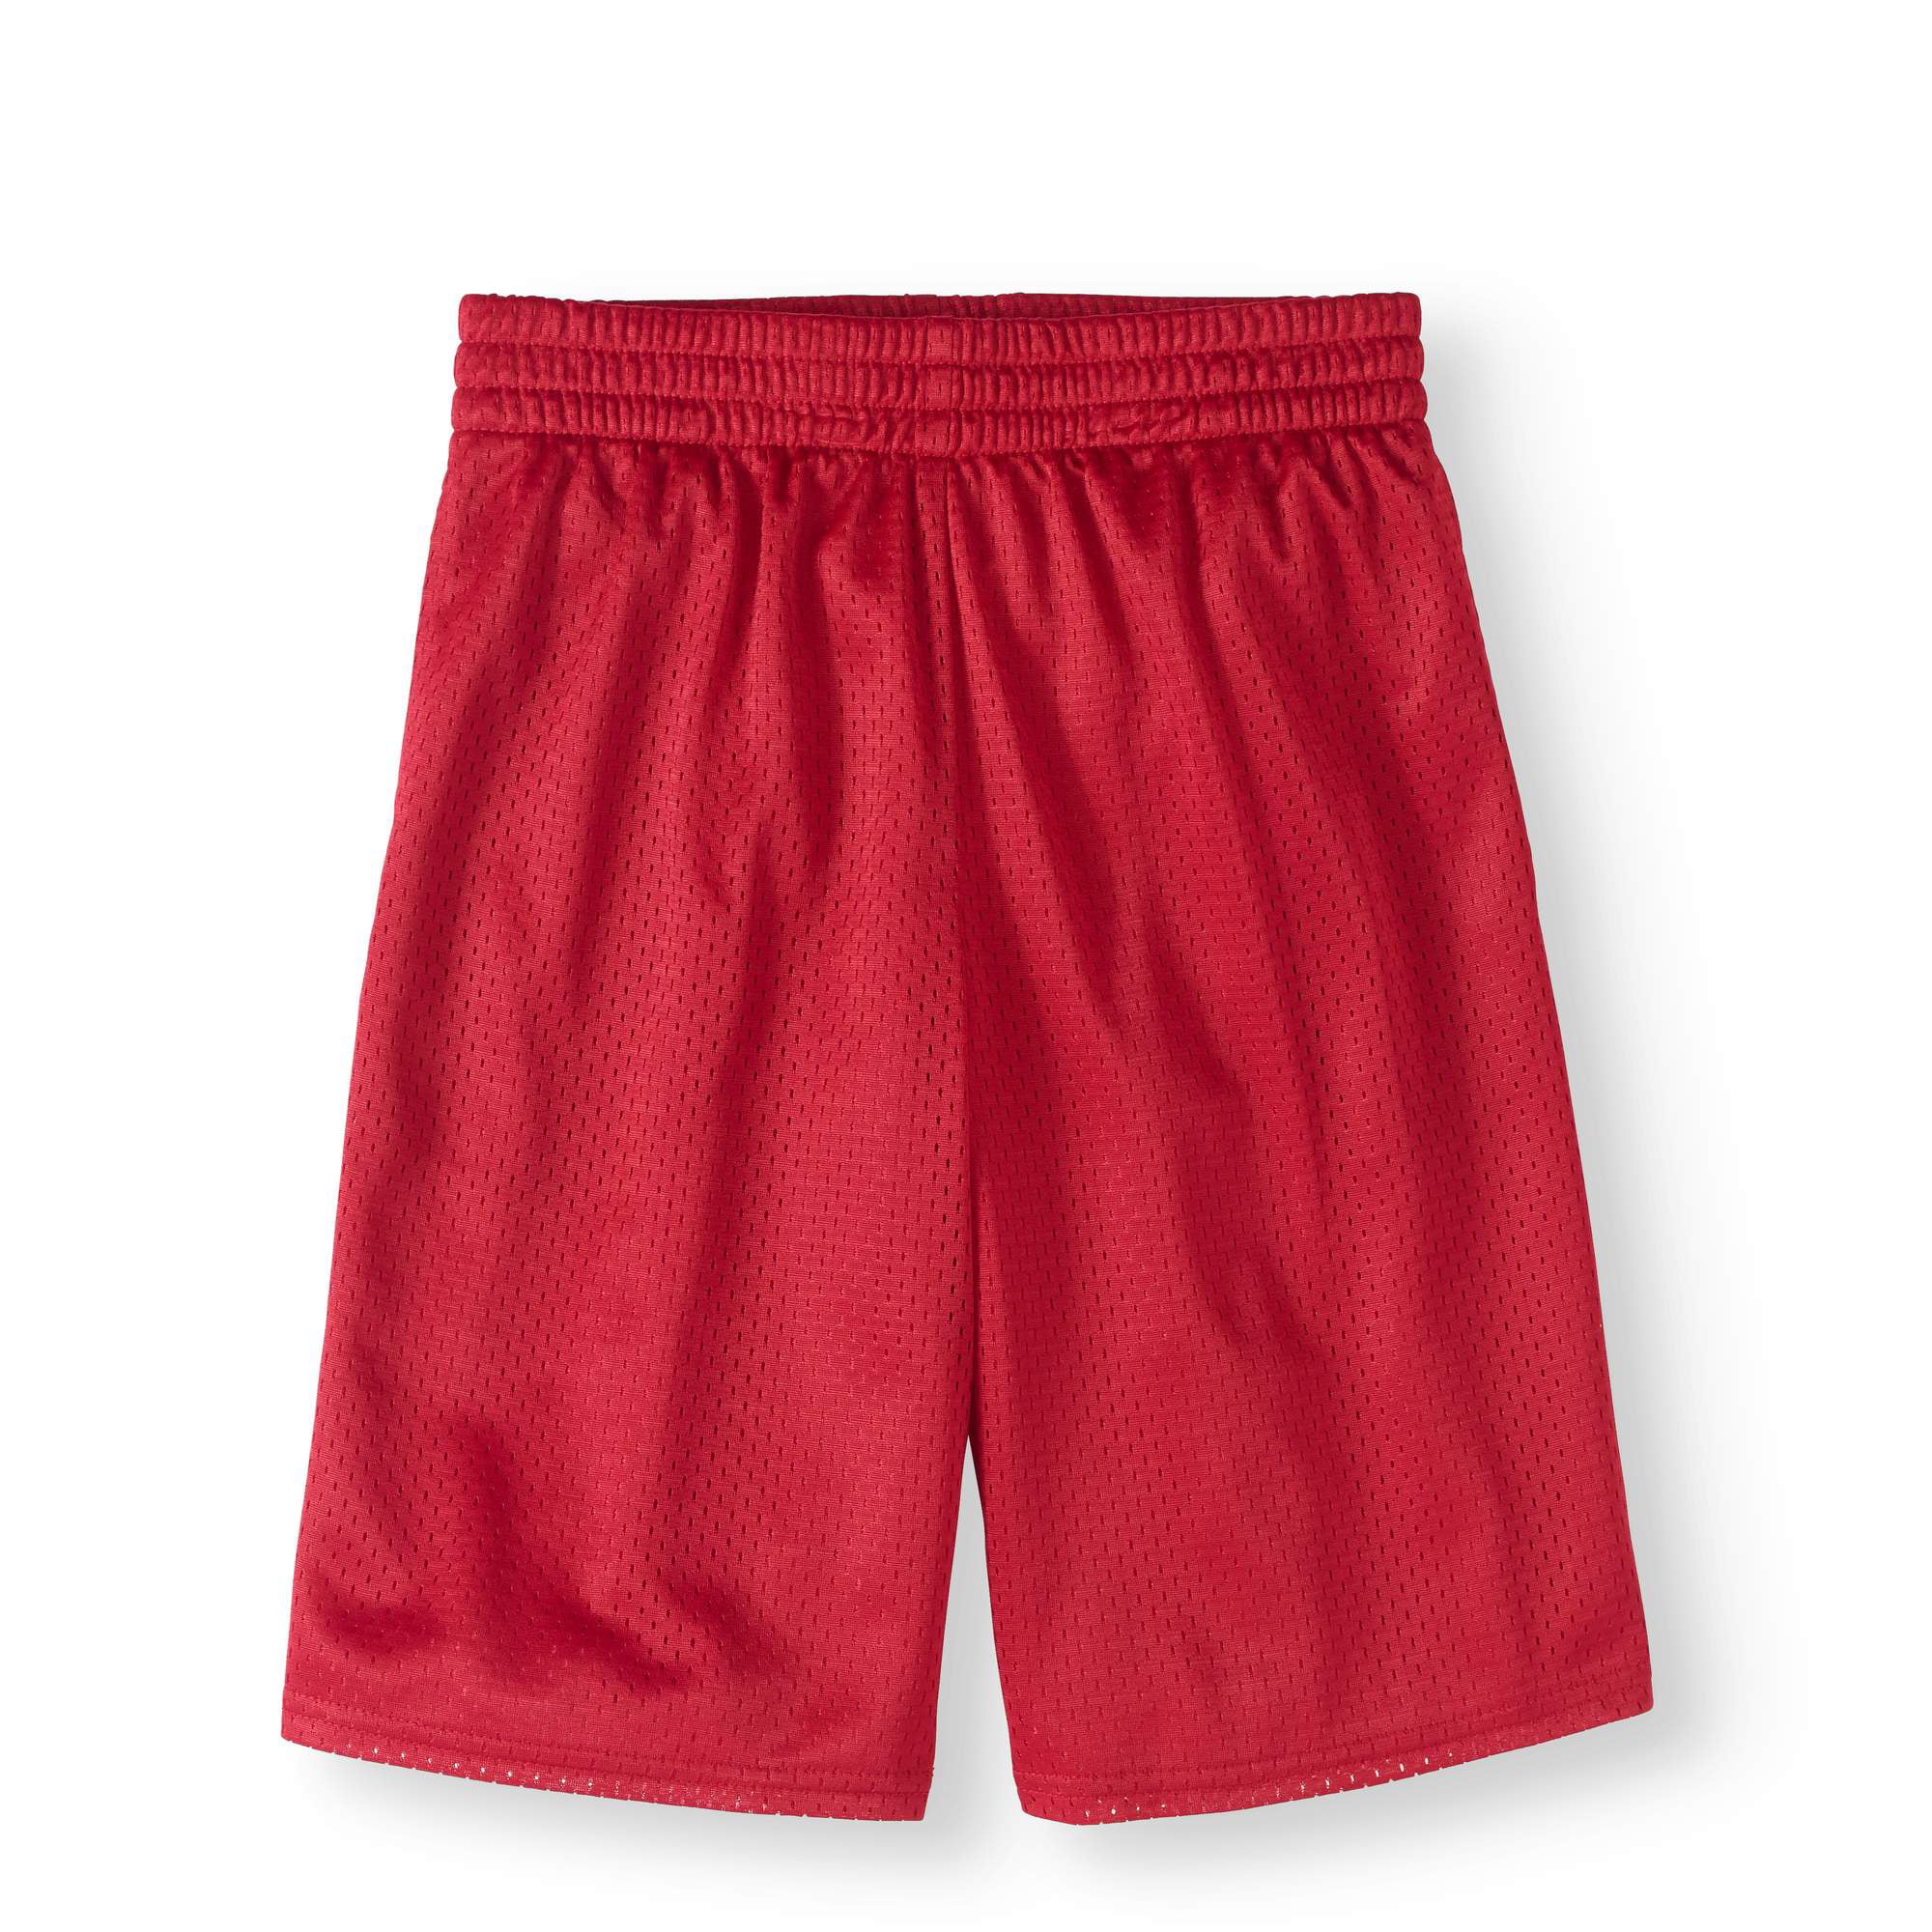 mesh shorts for boys